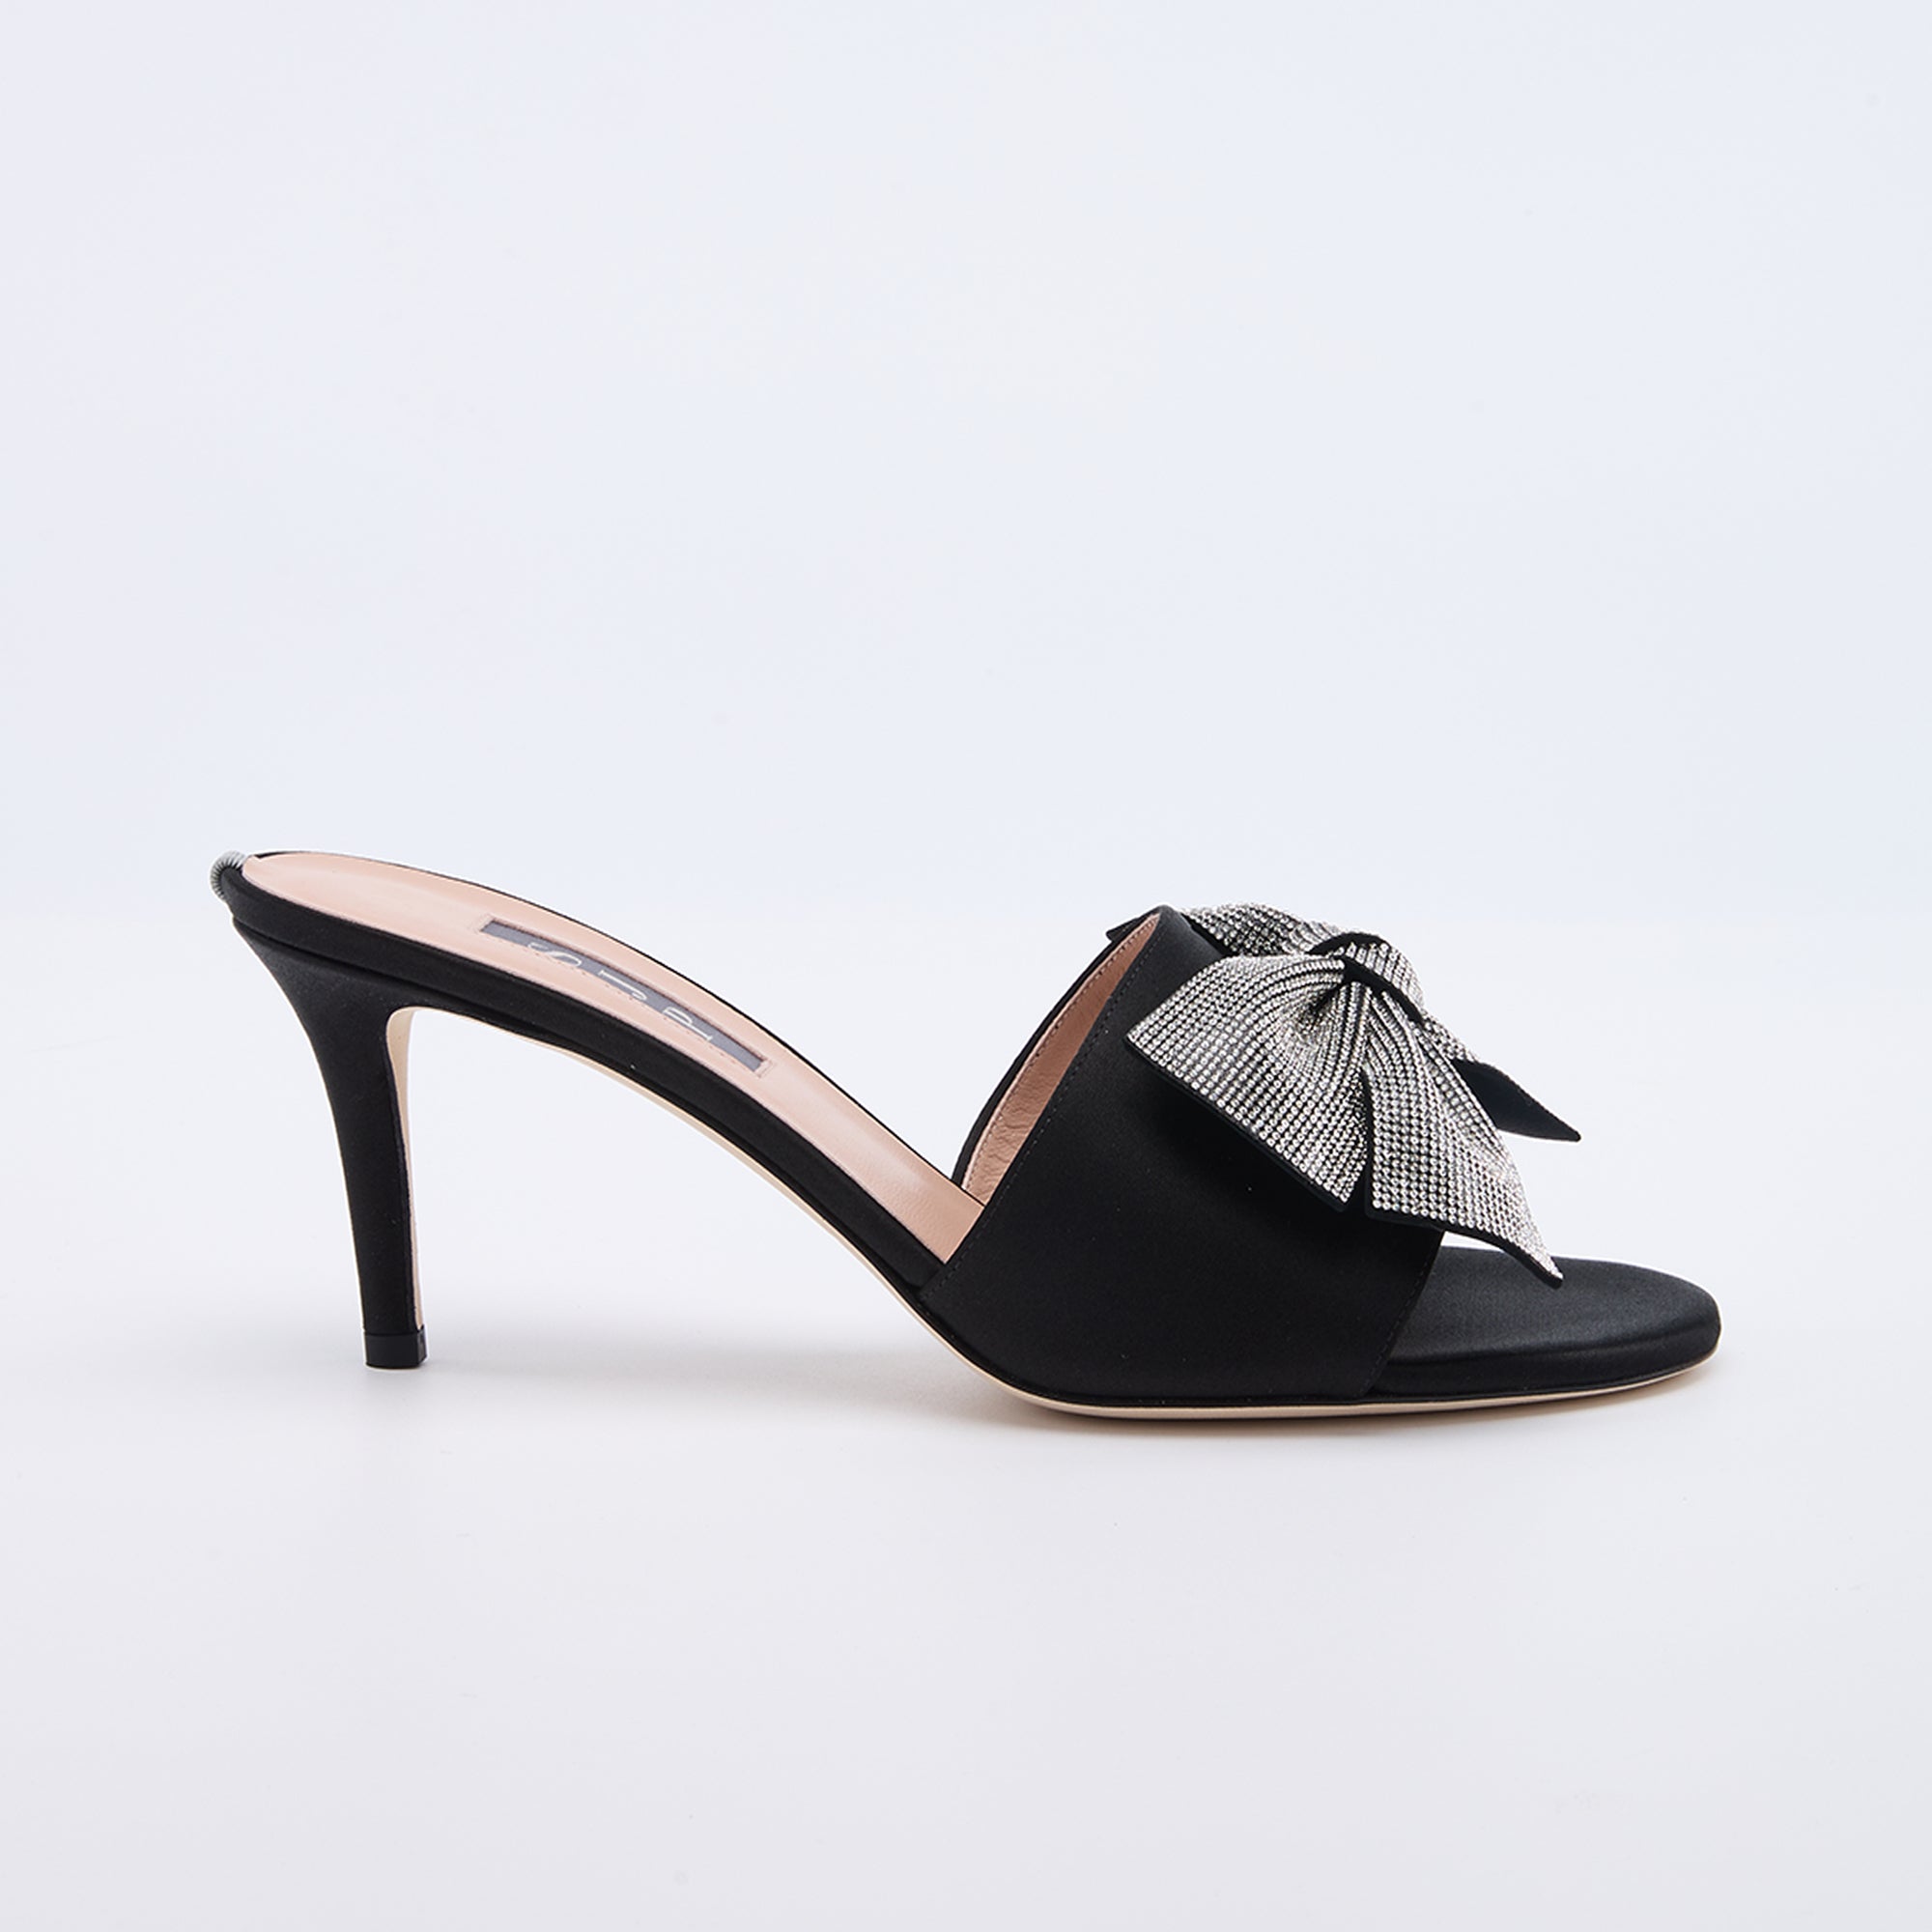 SJP by Sarah Jessica Parker Alcott 70mm Black Satin Sandals